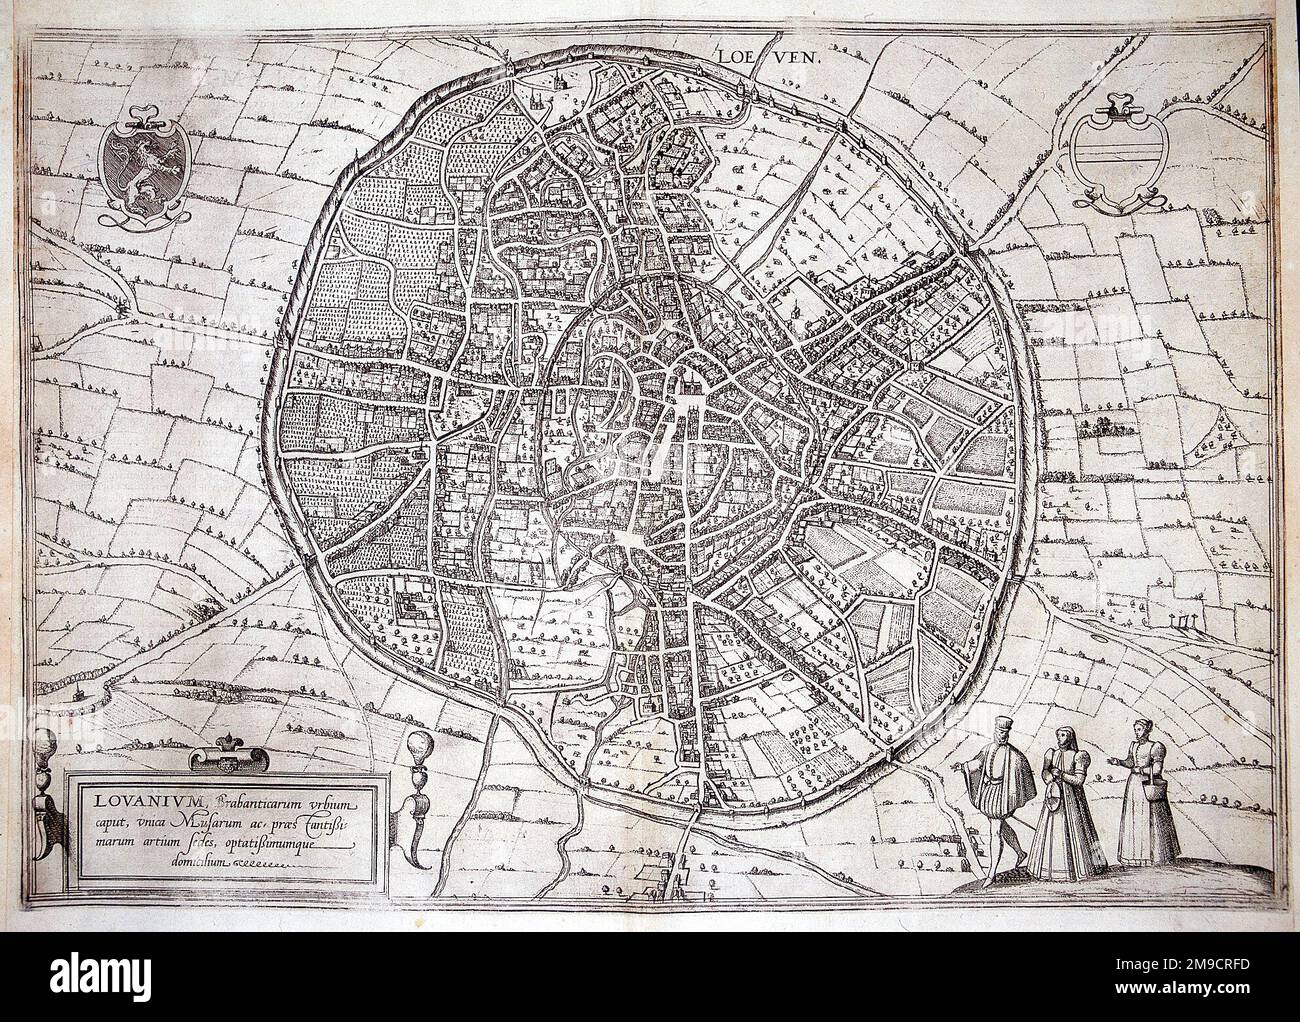 16th century Map of Louvain, Belgium Stock Photo